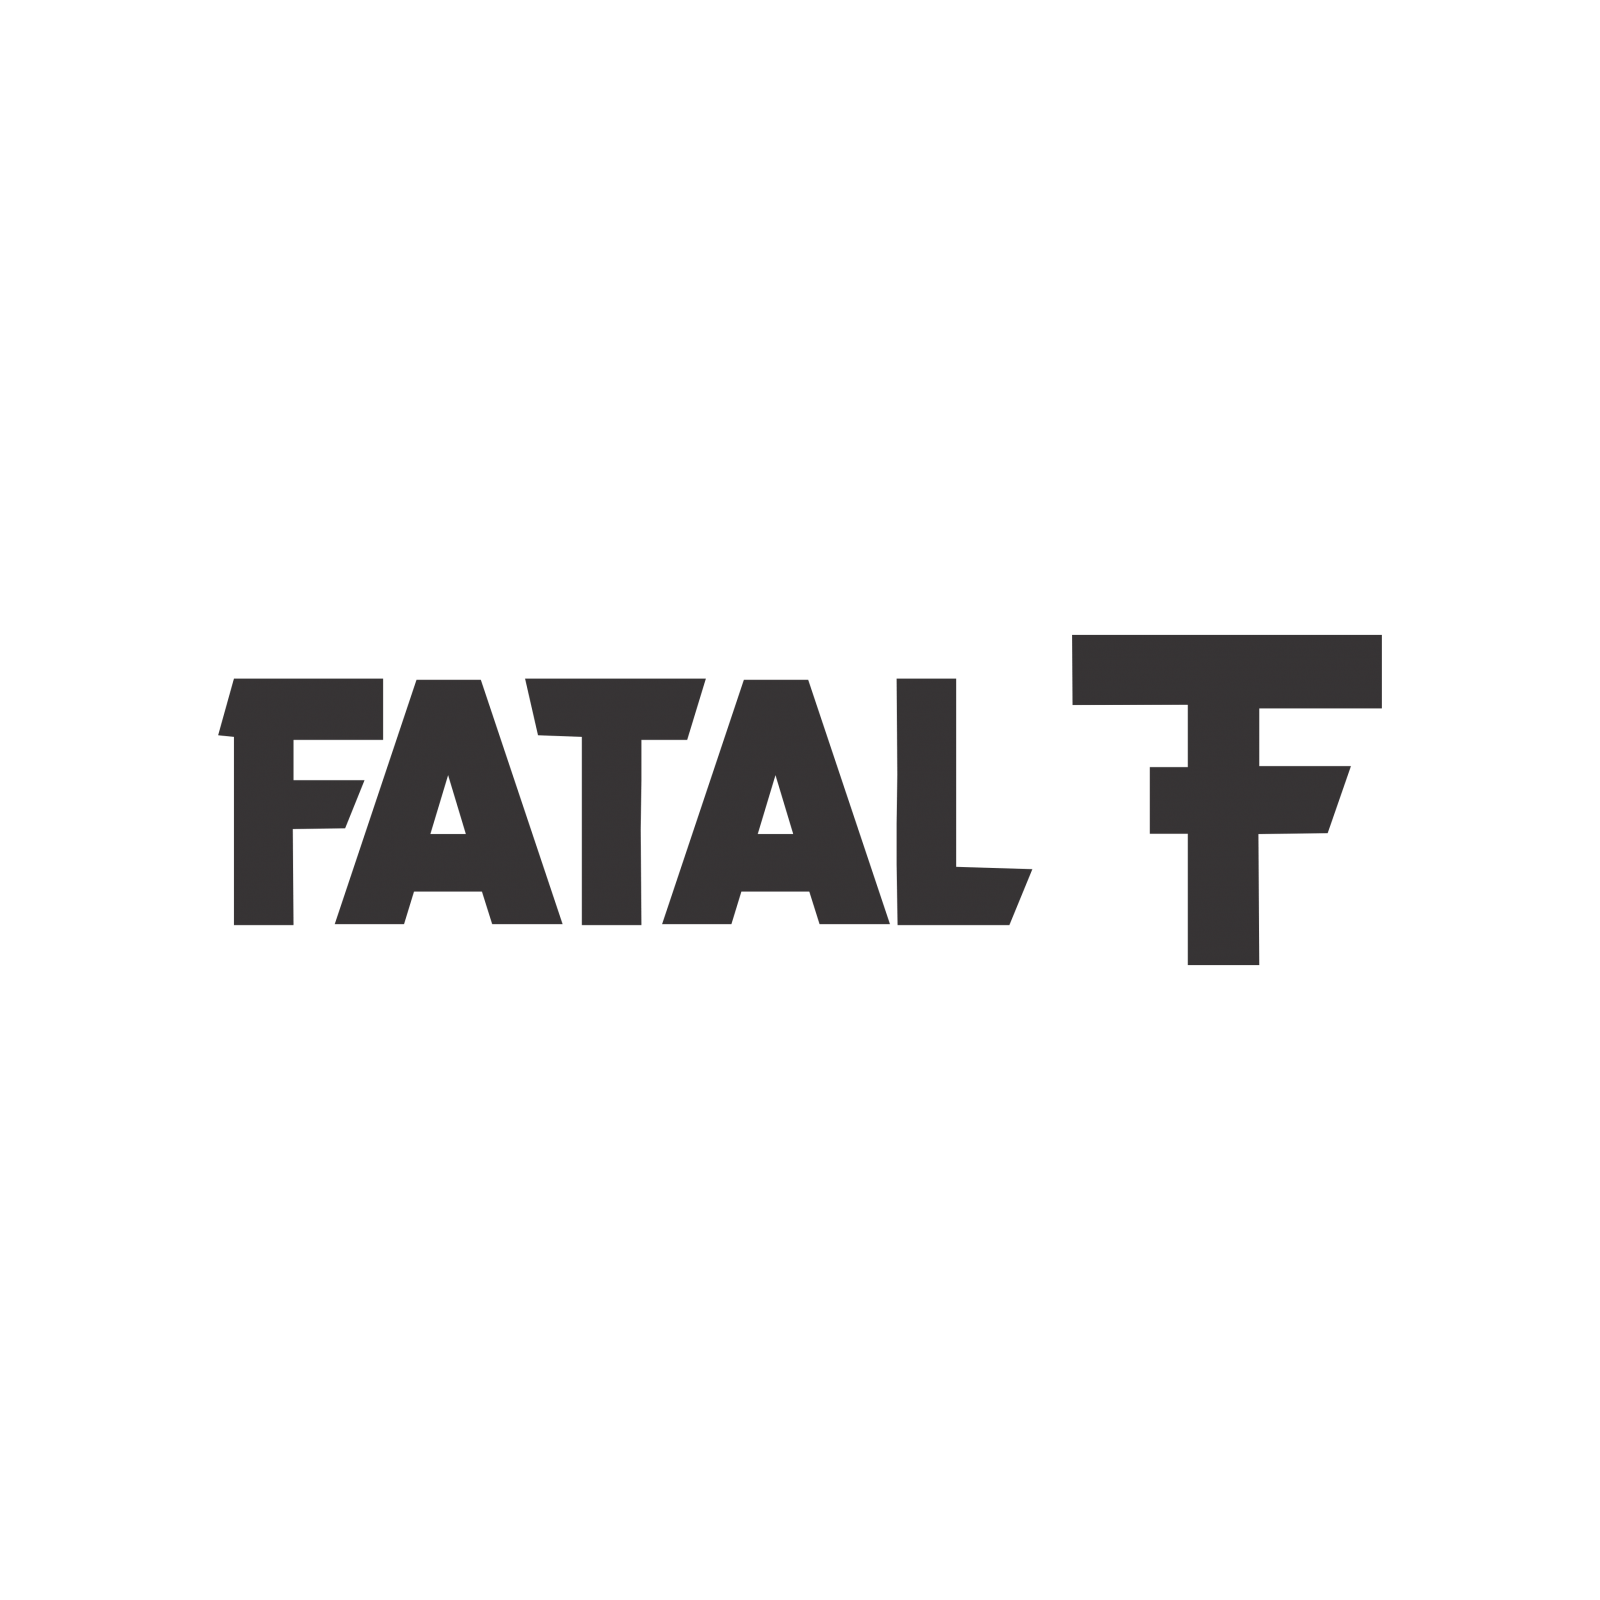 Fatal : Brand Short Description Type Here.